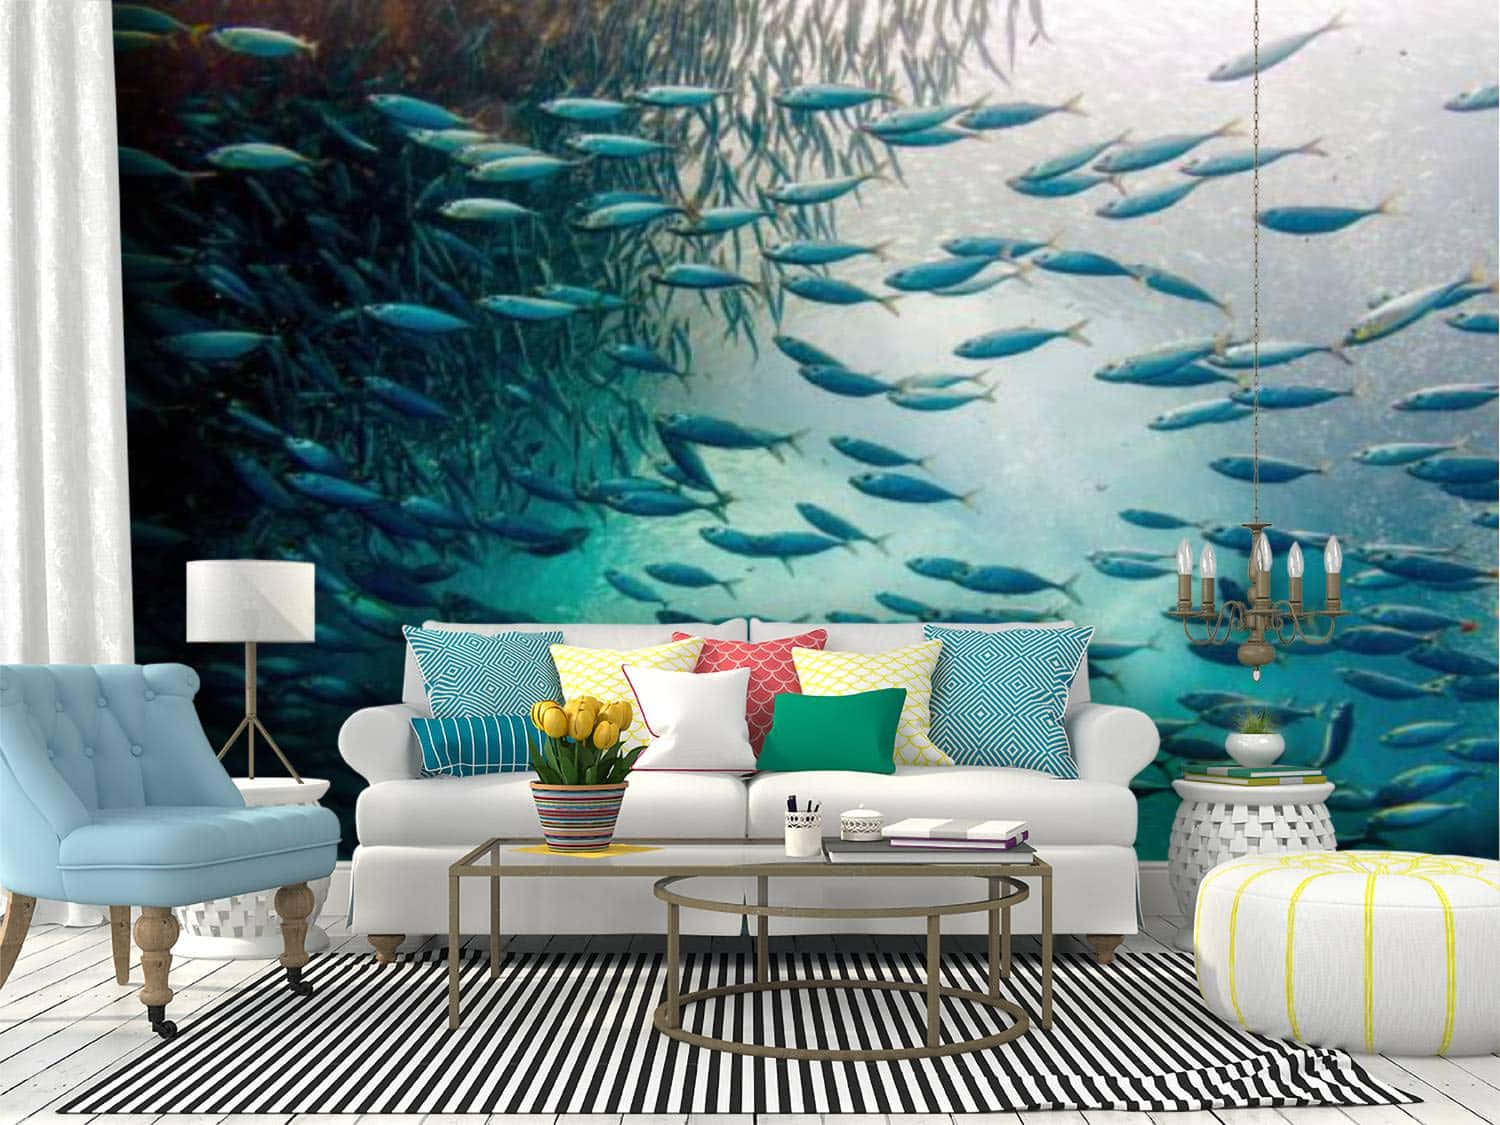 Underwater Sardine School Wall Mural Living Room Wallpaper